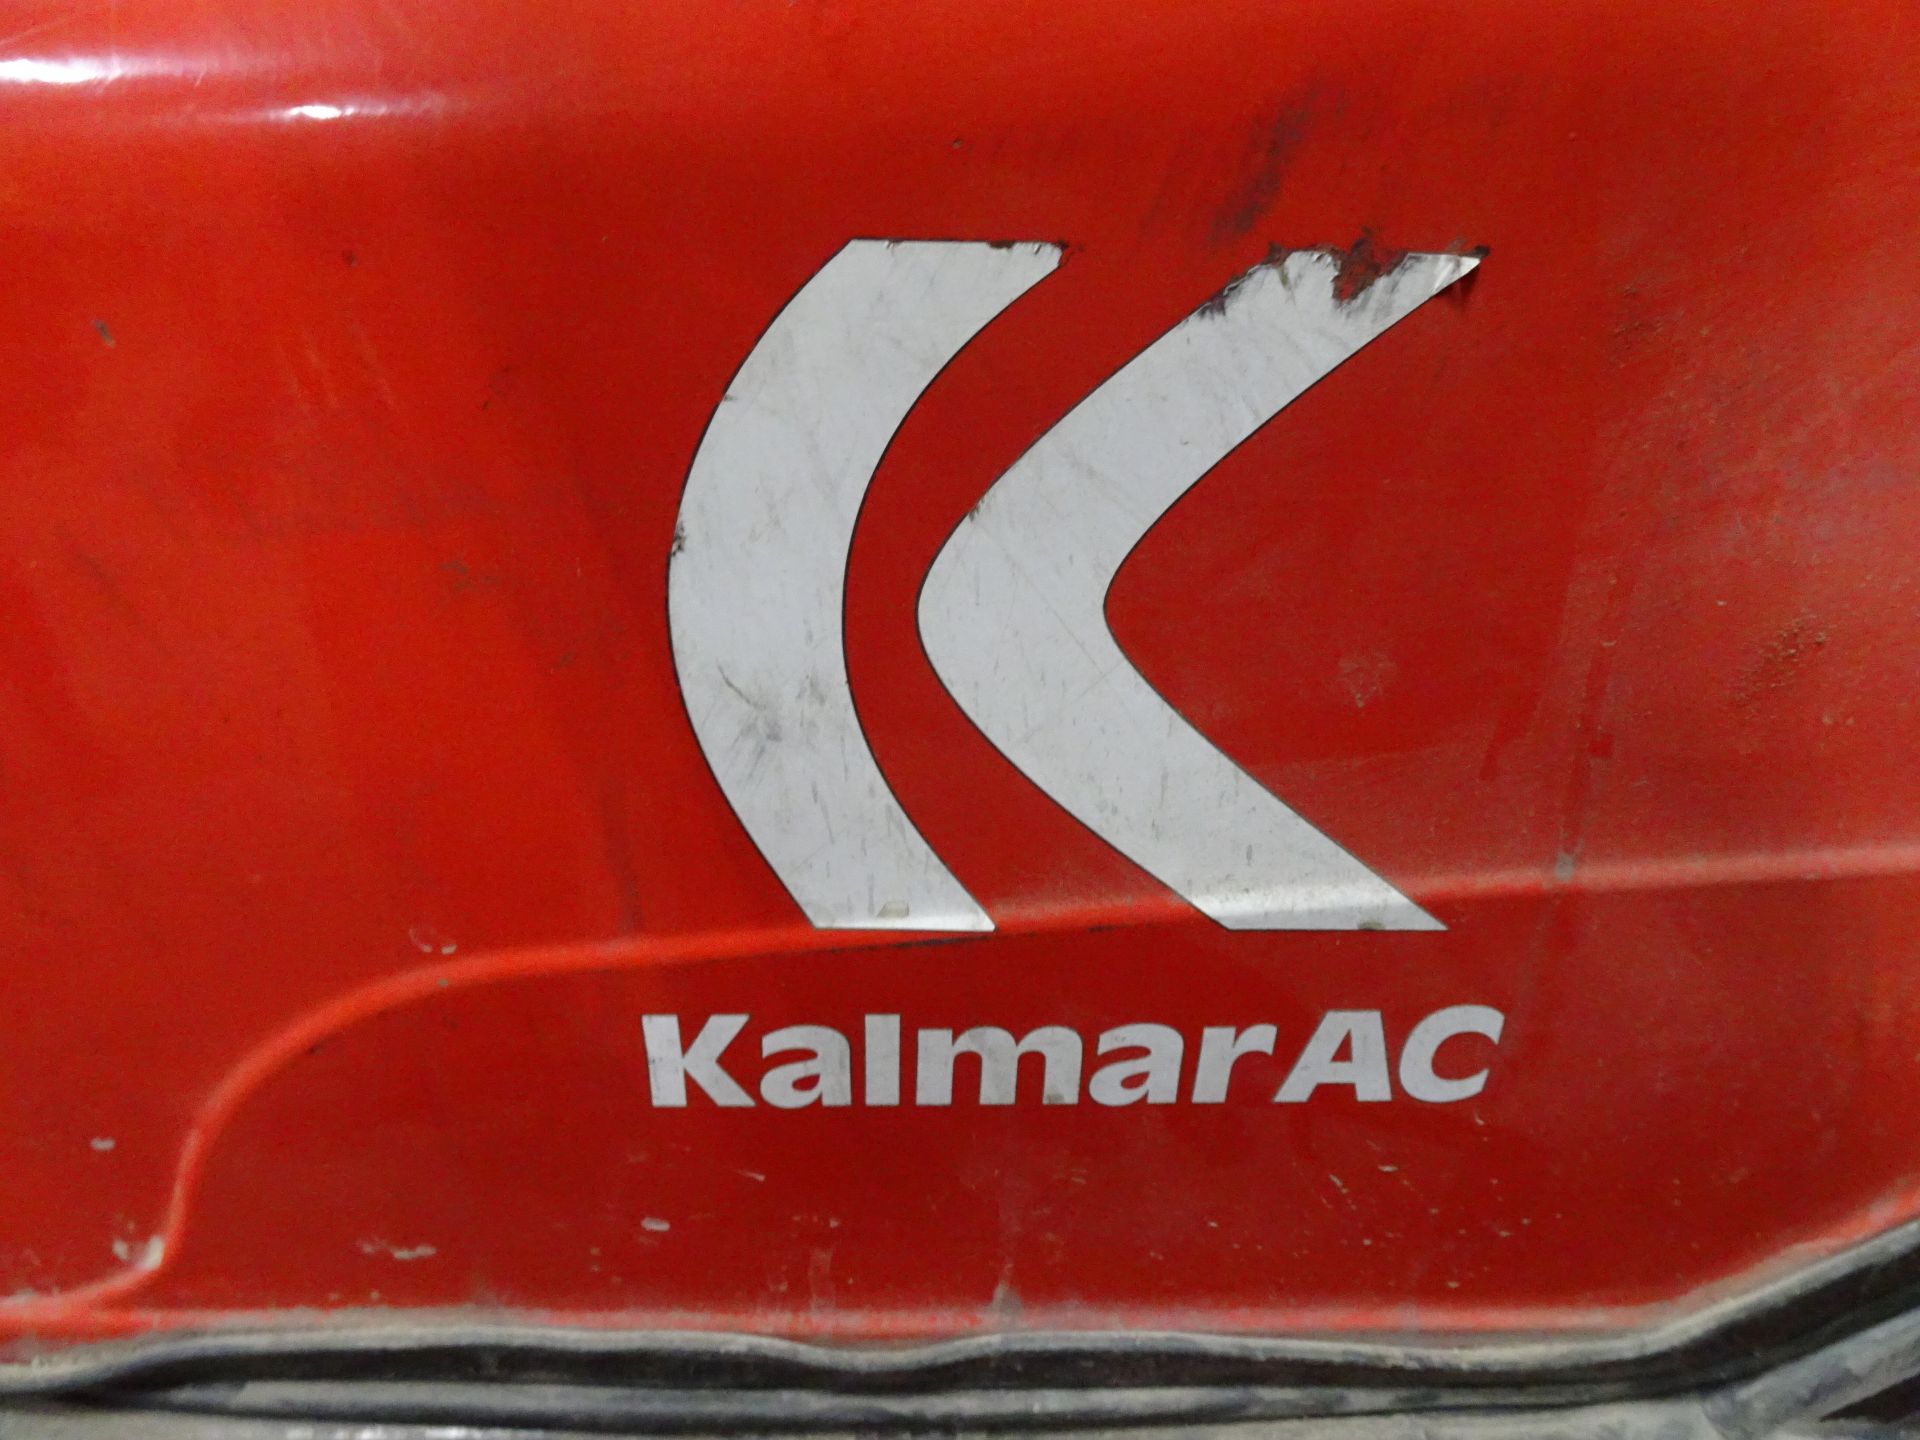 Kalmar Model P110CX6 9550 lb Capacity Gas Forklift - Image 3 of 4